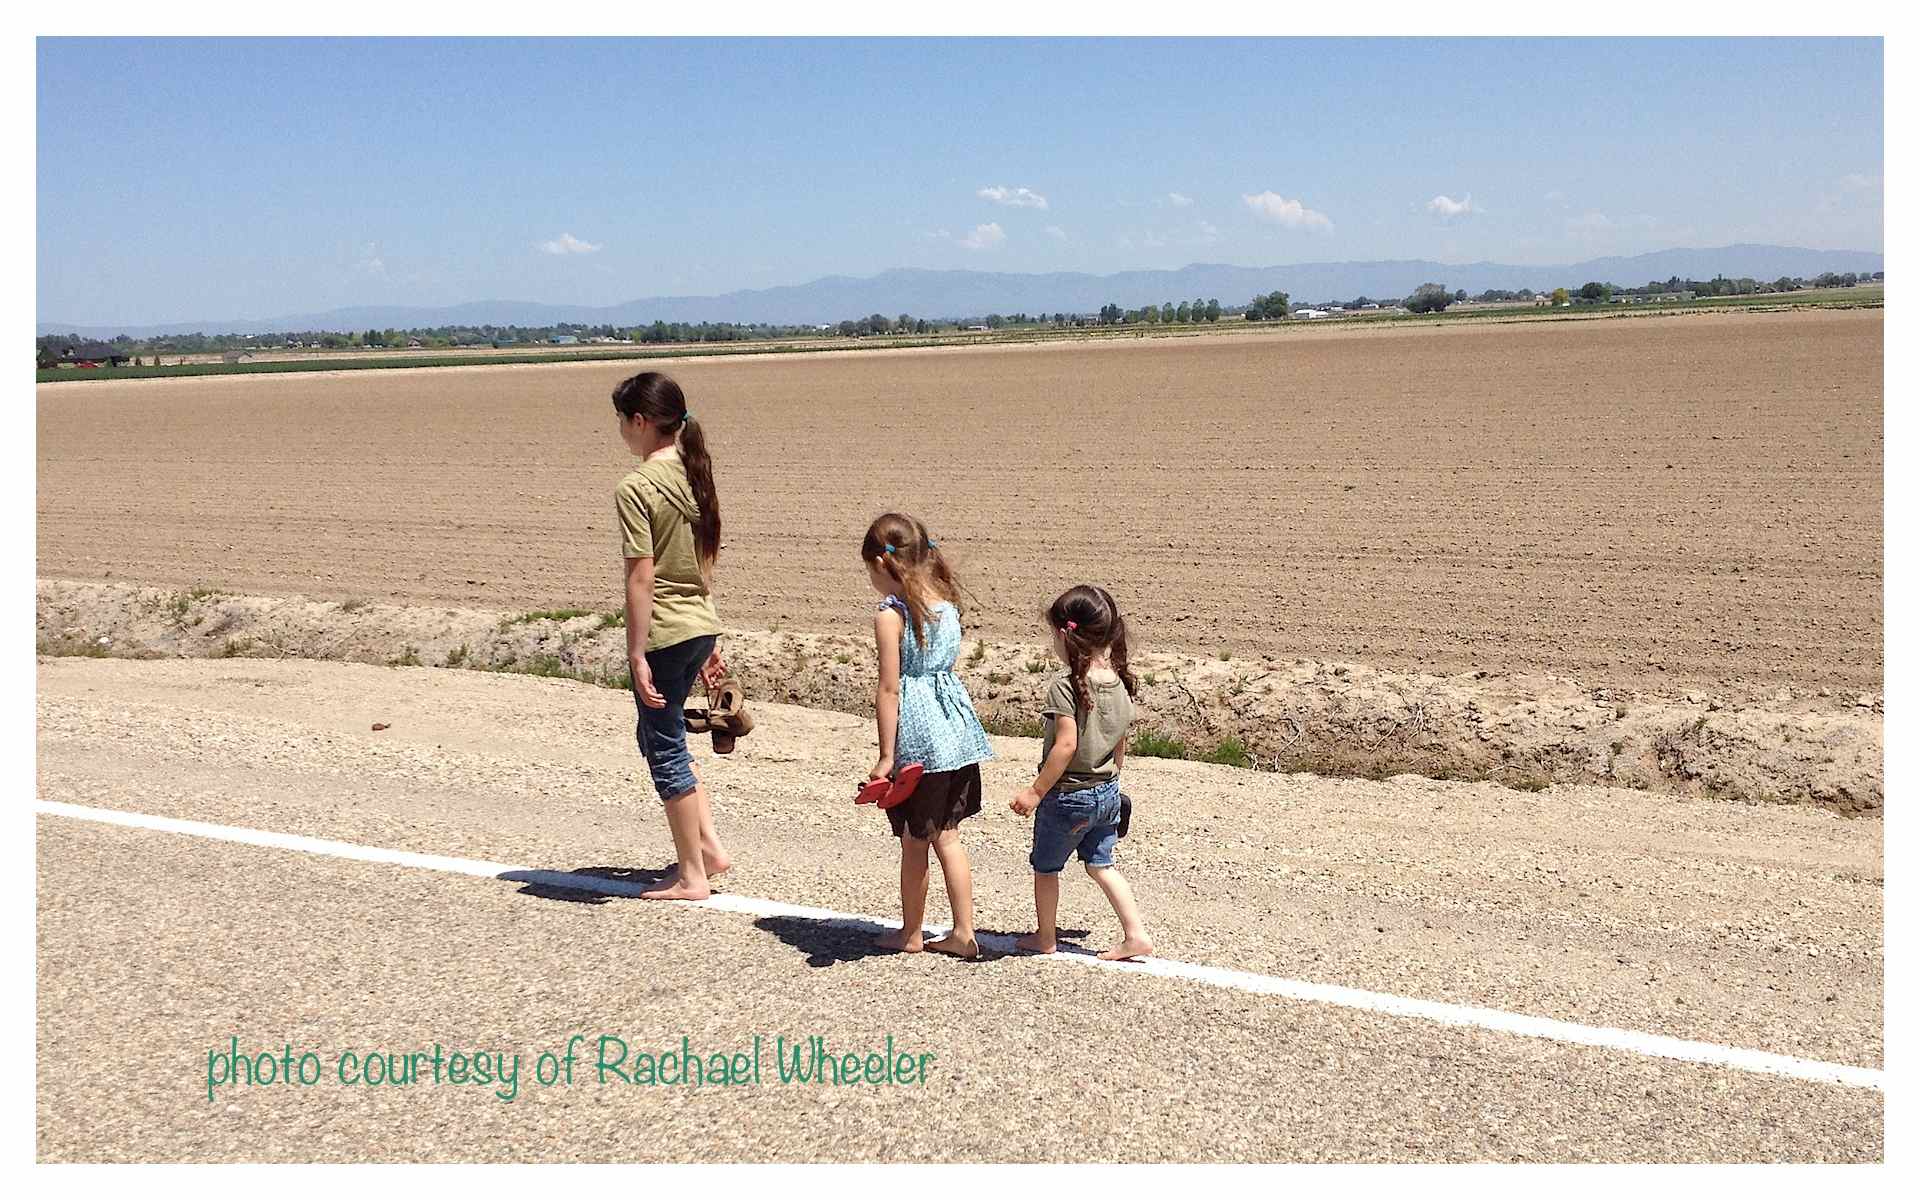 http://dailyimprovisations.com/wp-content/uploads/2014/06/barefoot-kids-on-road-backs.jpg